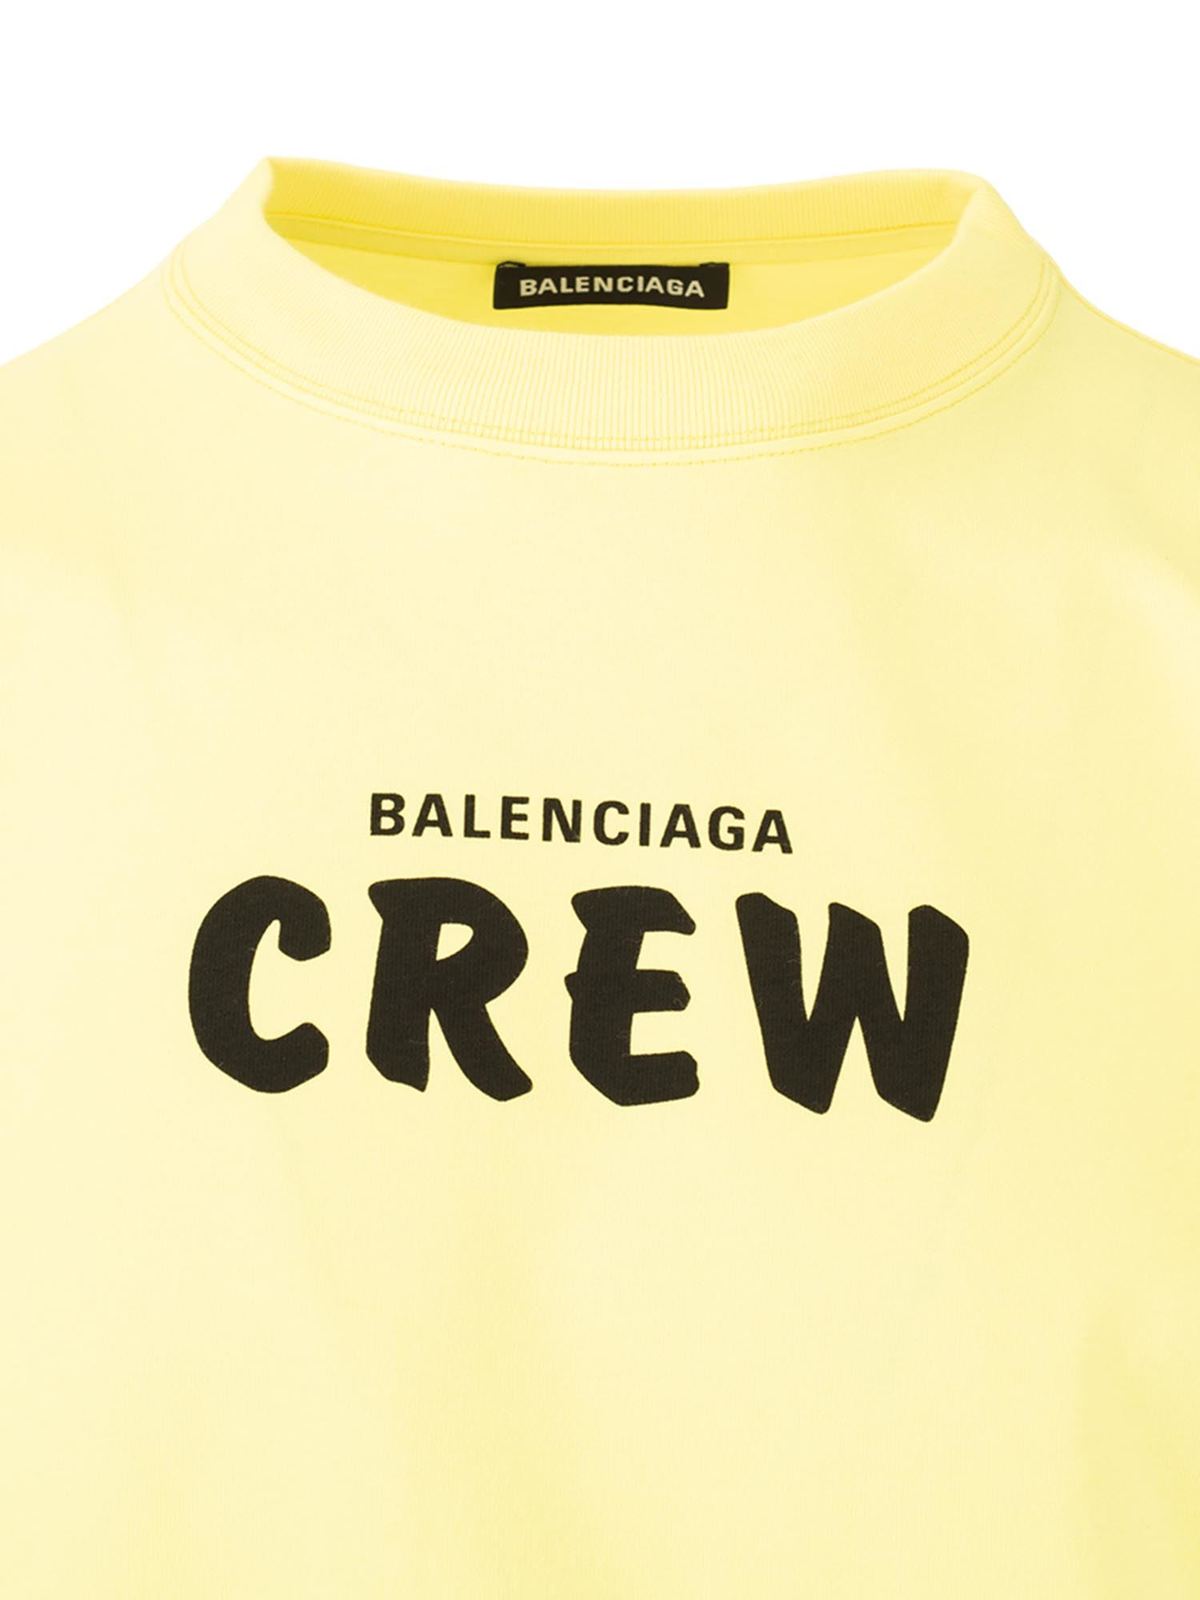 Balenciaga Crew Tシャツ B'z 稲葉 着用 バレンシアガ | 最終値下 B'z 